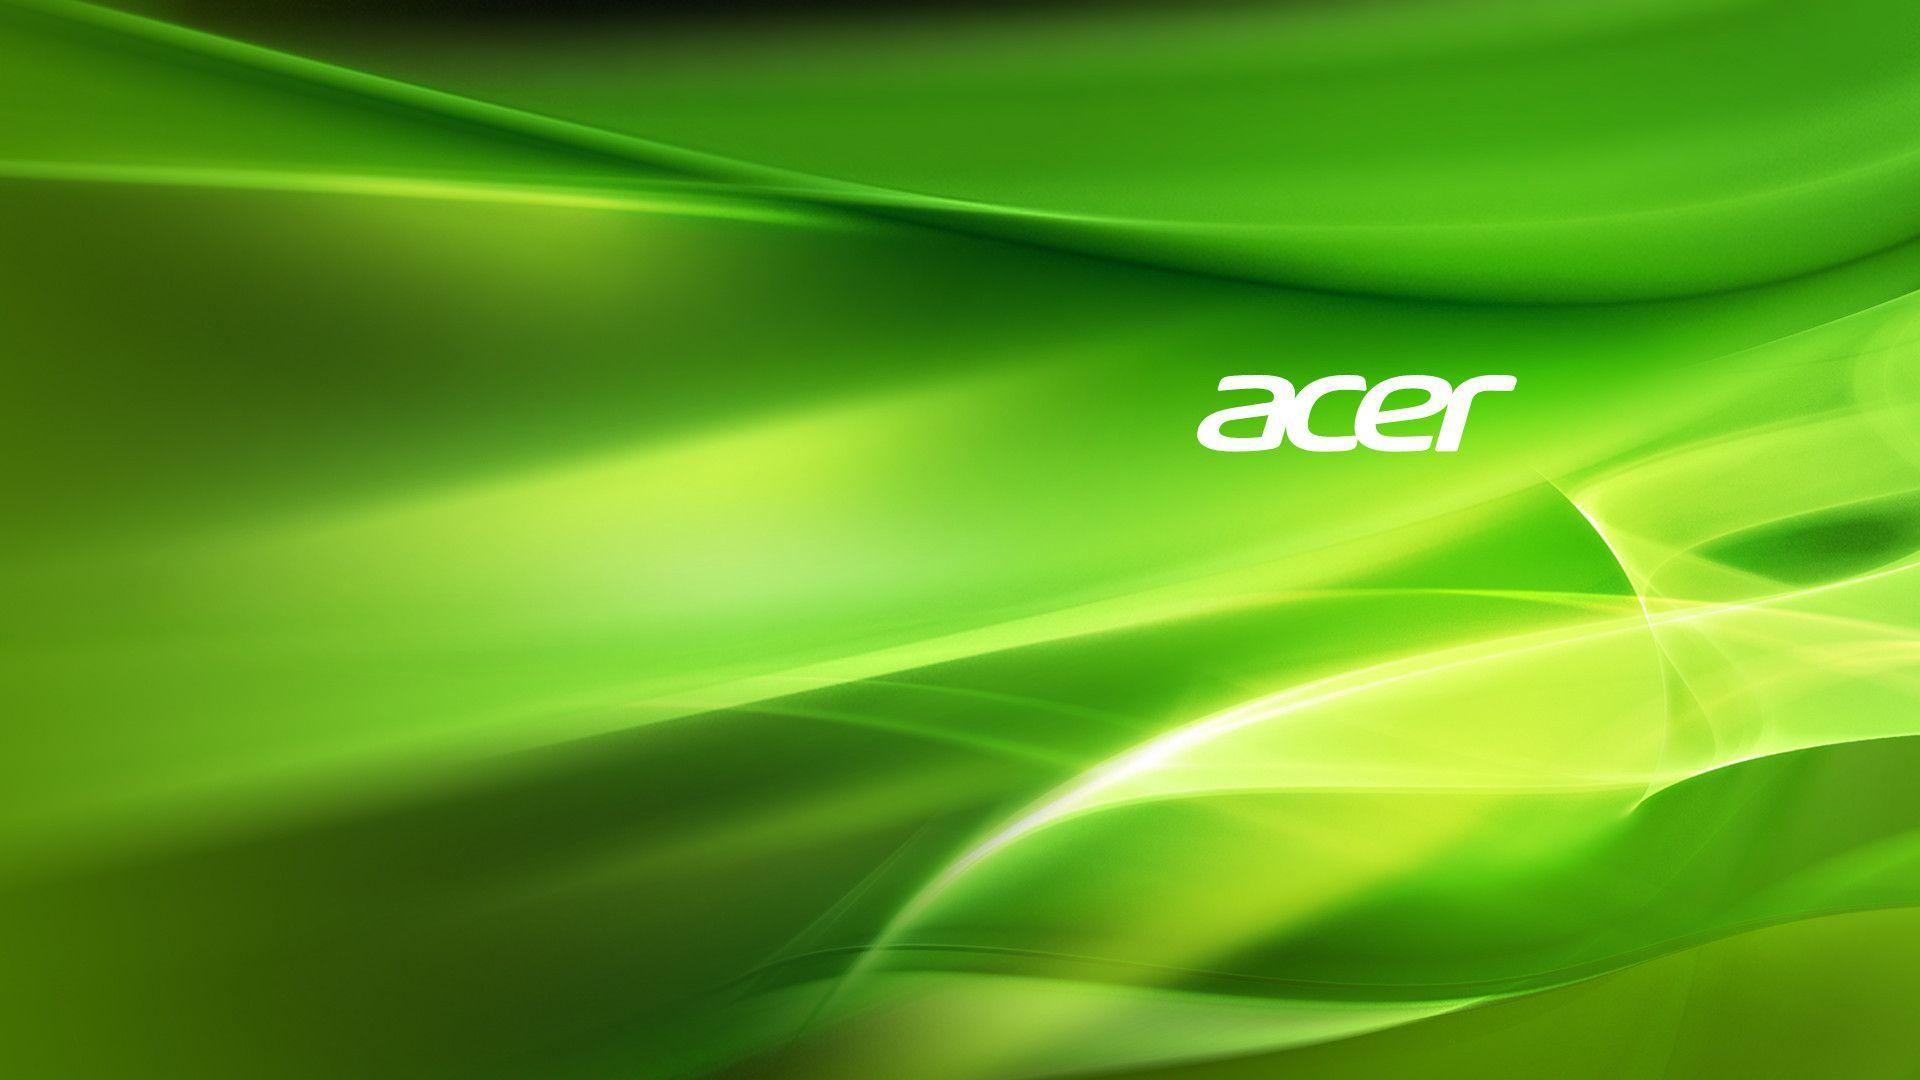 Related Picture Acer Veriton Desktop Wallpaper Car Picture